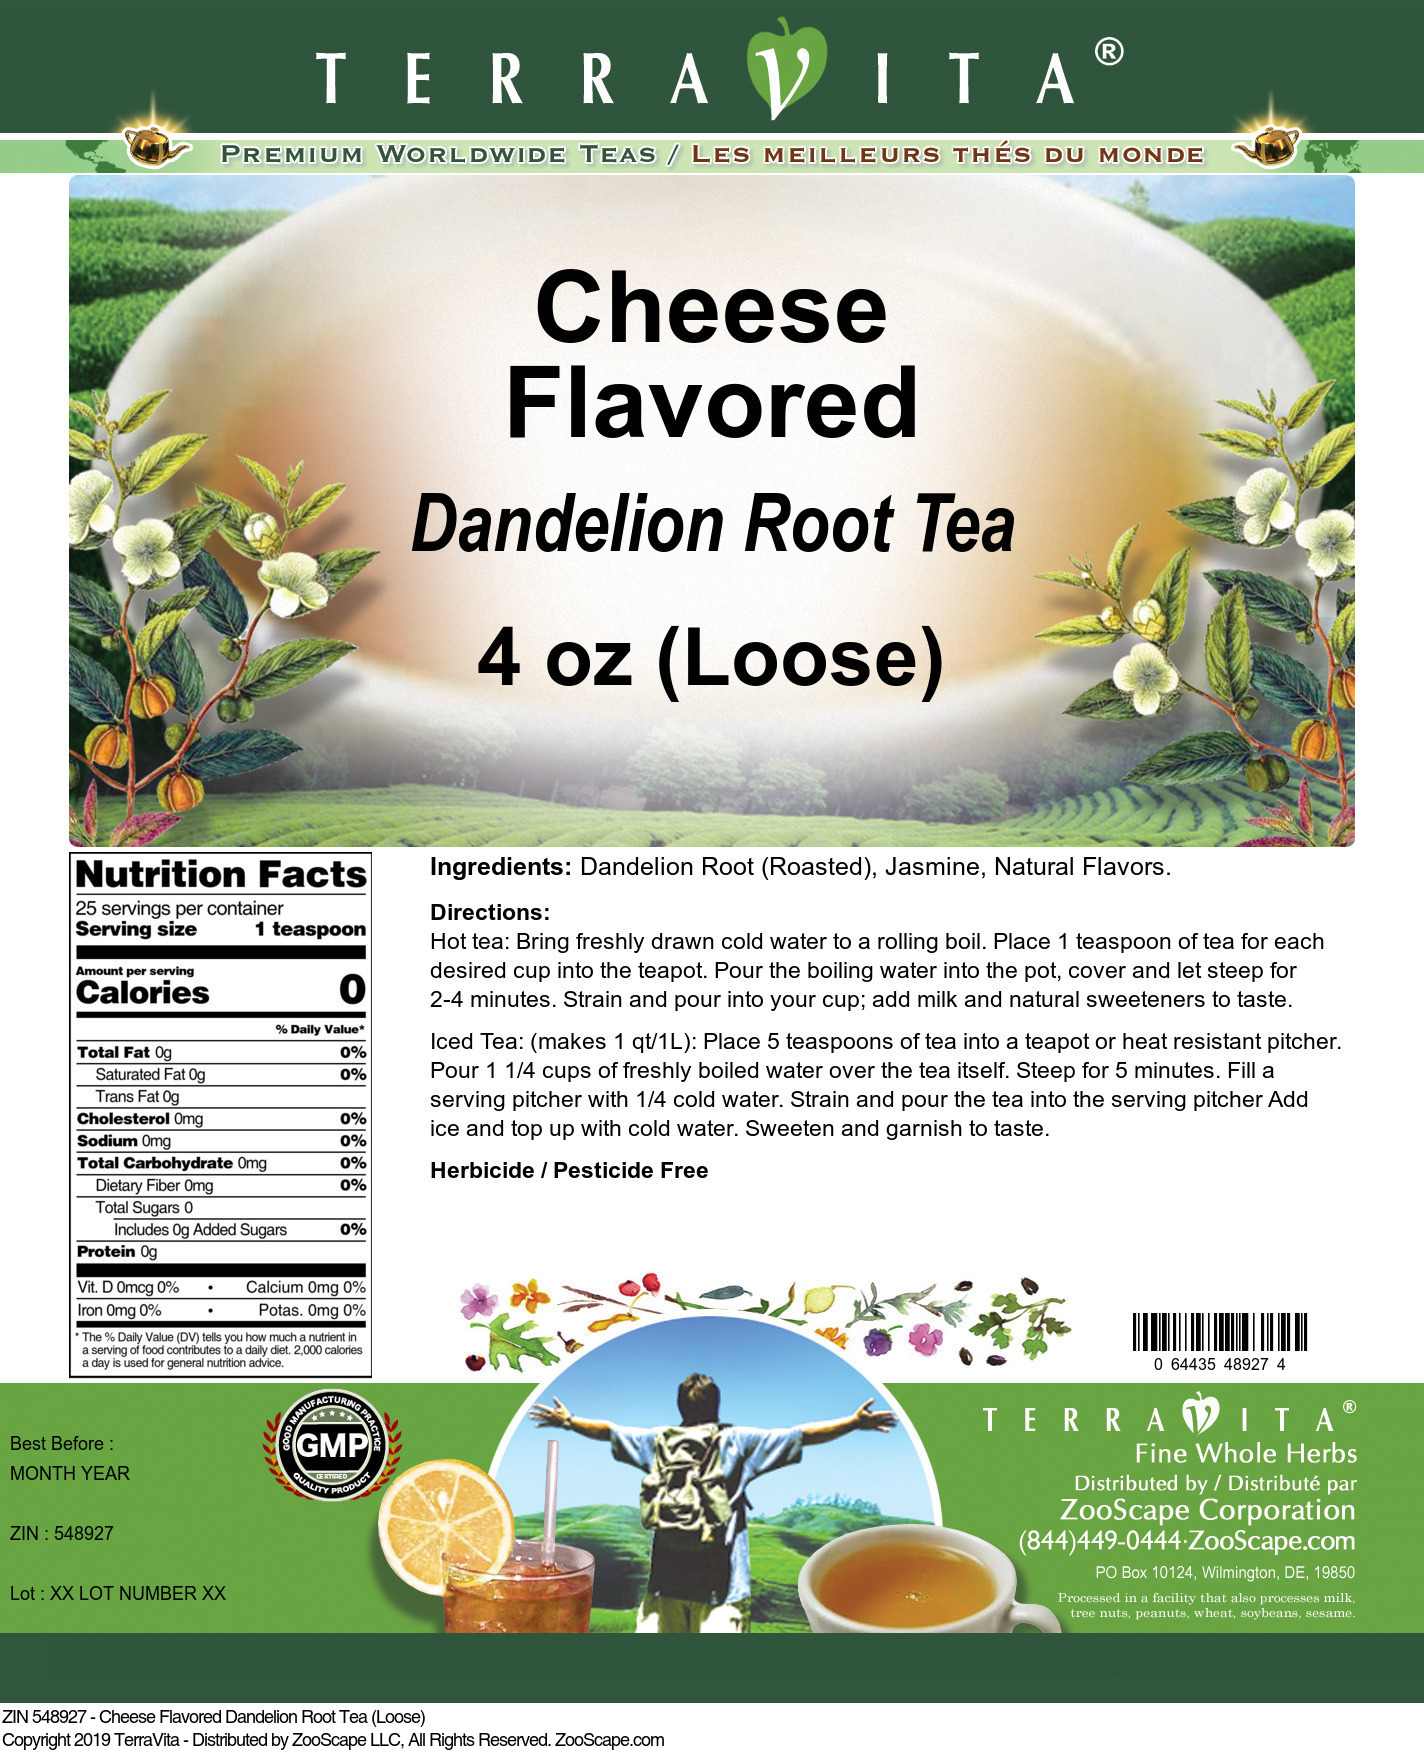 Cheese Flavored Dandelion Root Tea (Loose) - Label